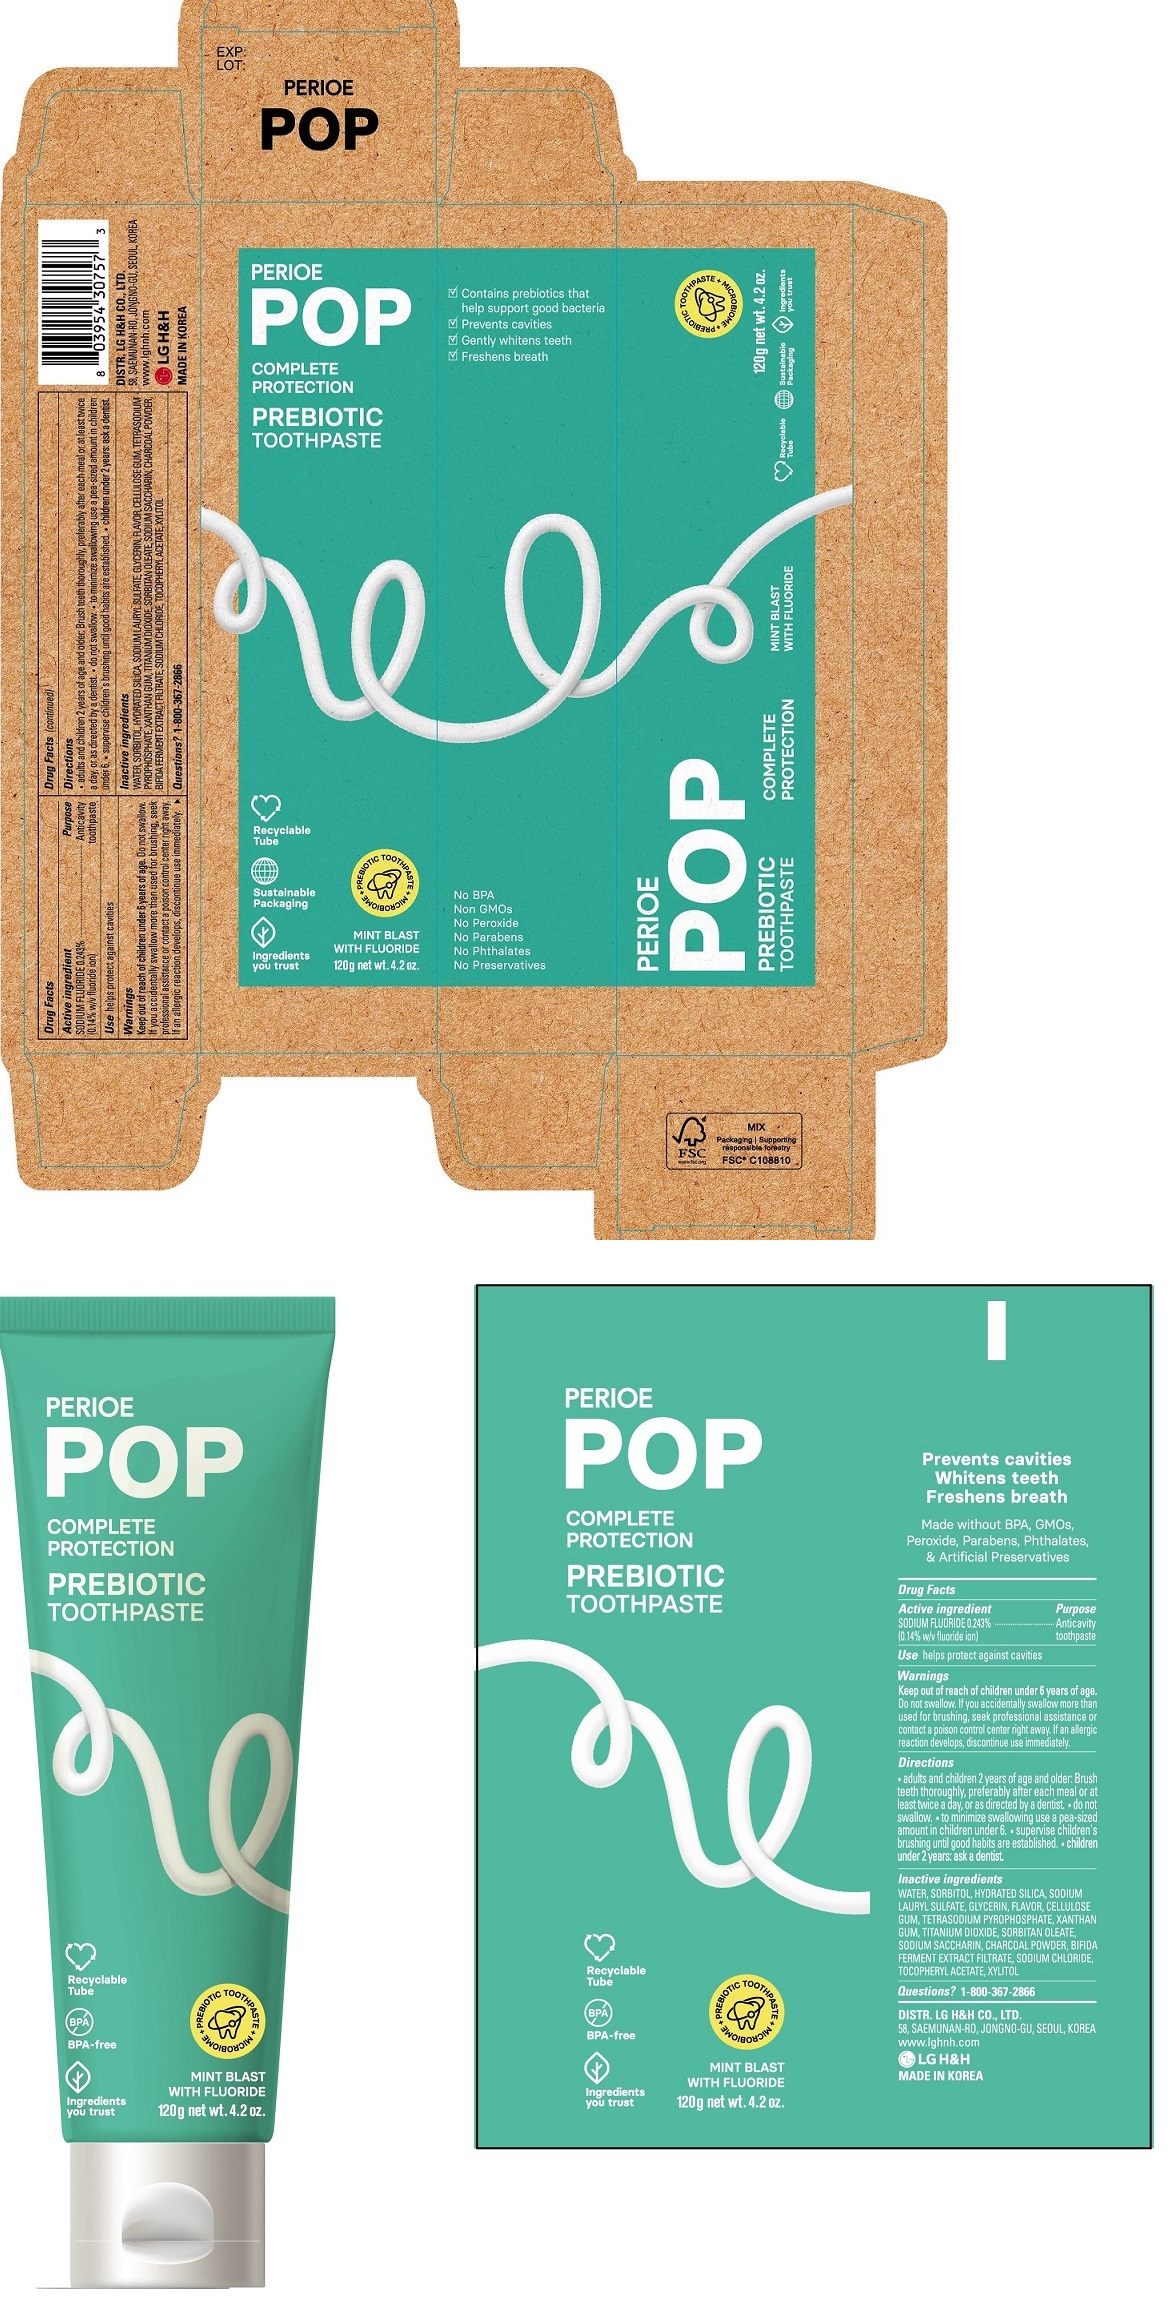 Perioe pop complete protection prebiotic toothpaste